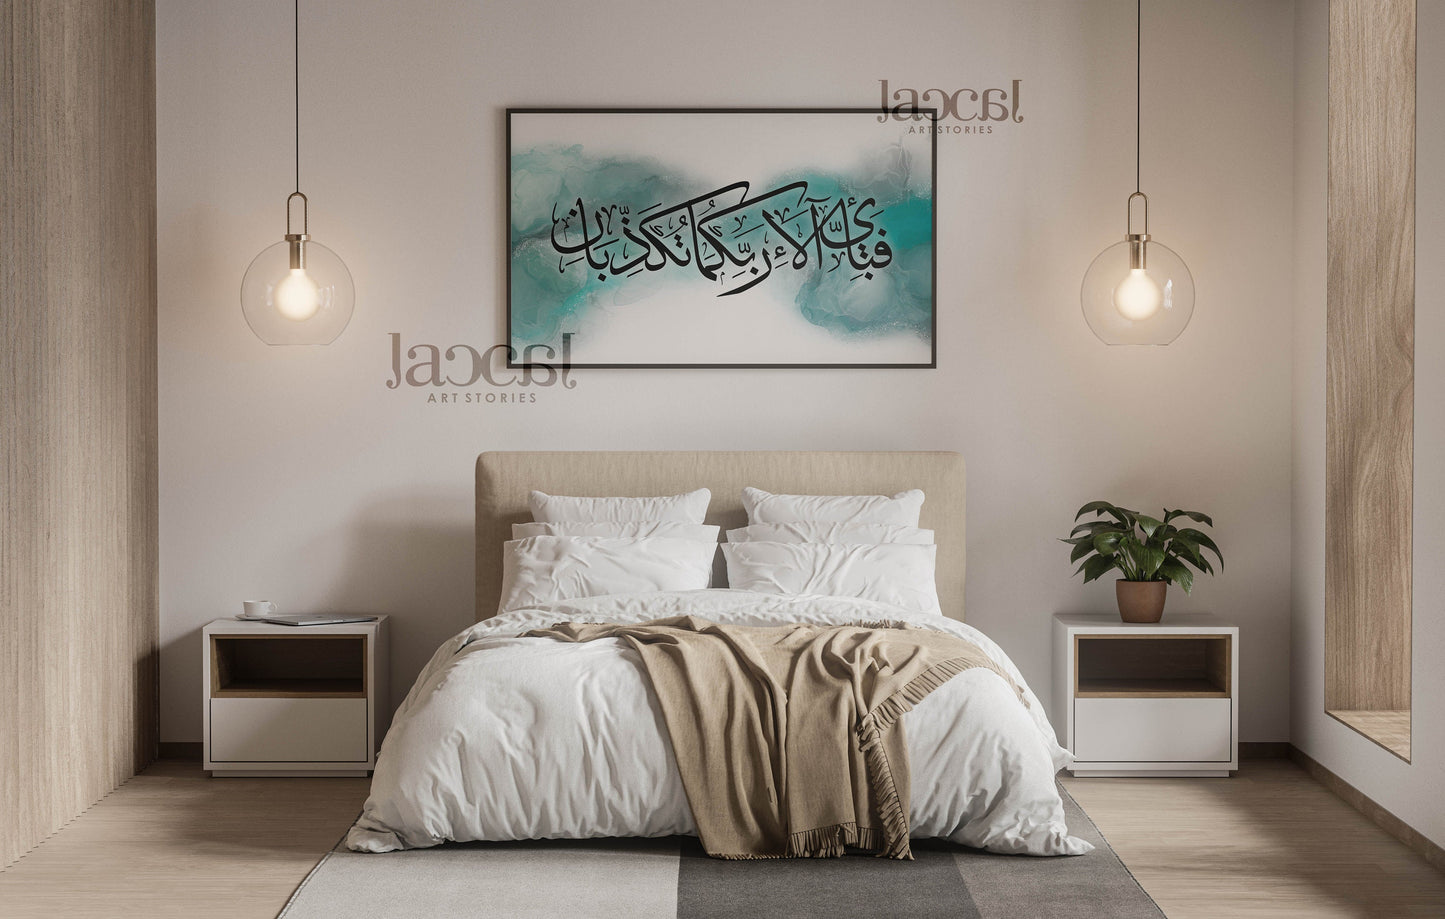 Arabic Calligraphy Surah Ar Rahman Fabi ayyi ala with Green Abstract Alcohol Ink Art, Arabic Calligraphy, Islam Wall Art, Islamic Home Decor